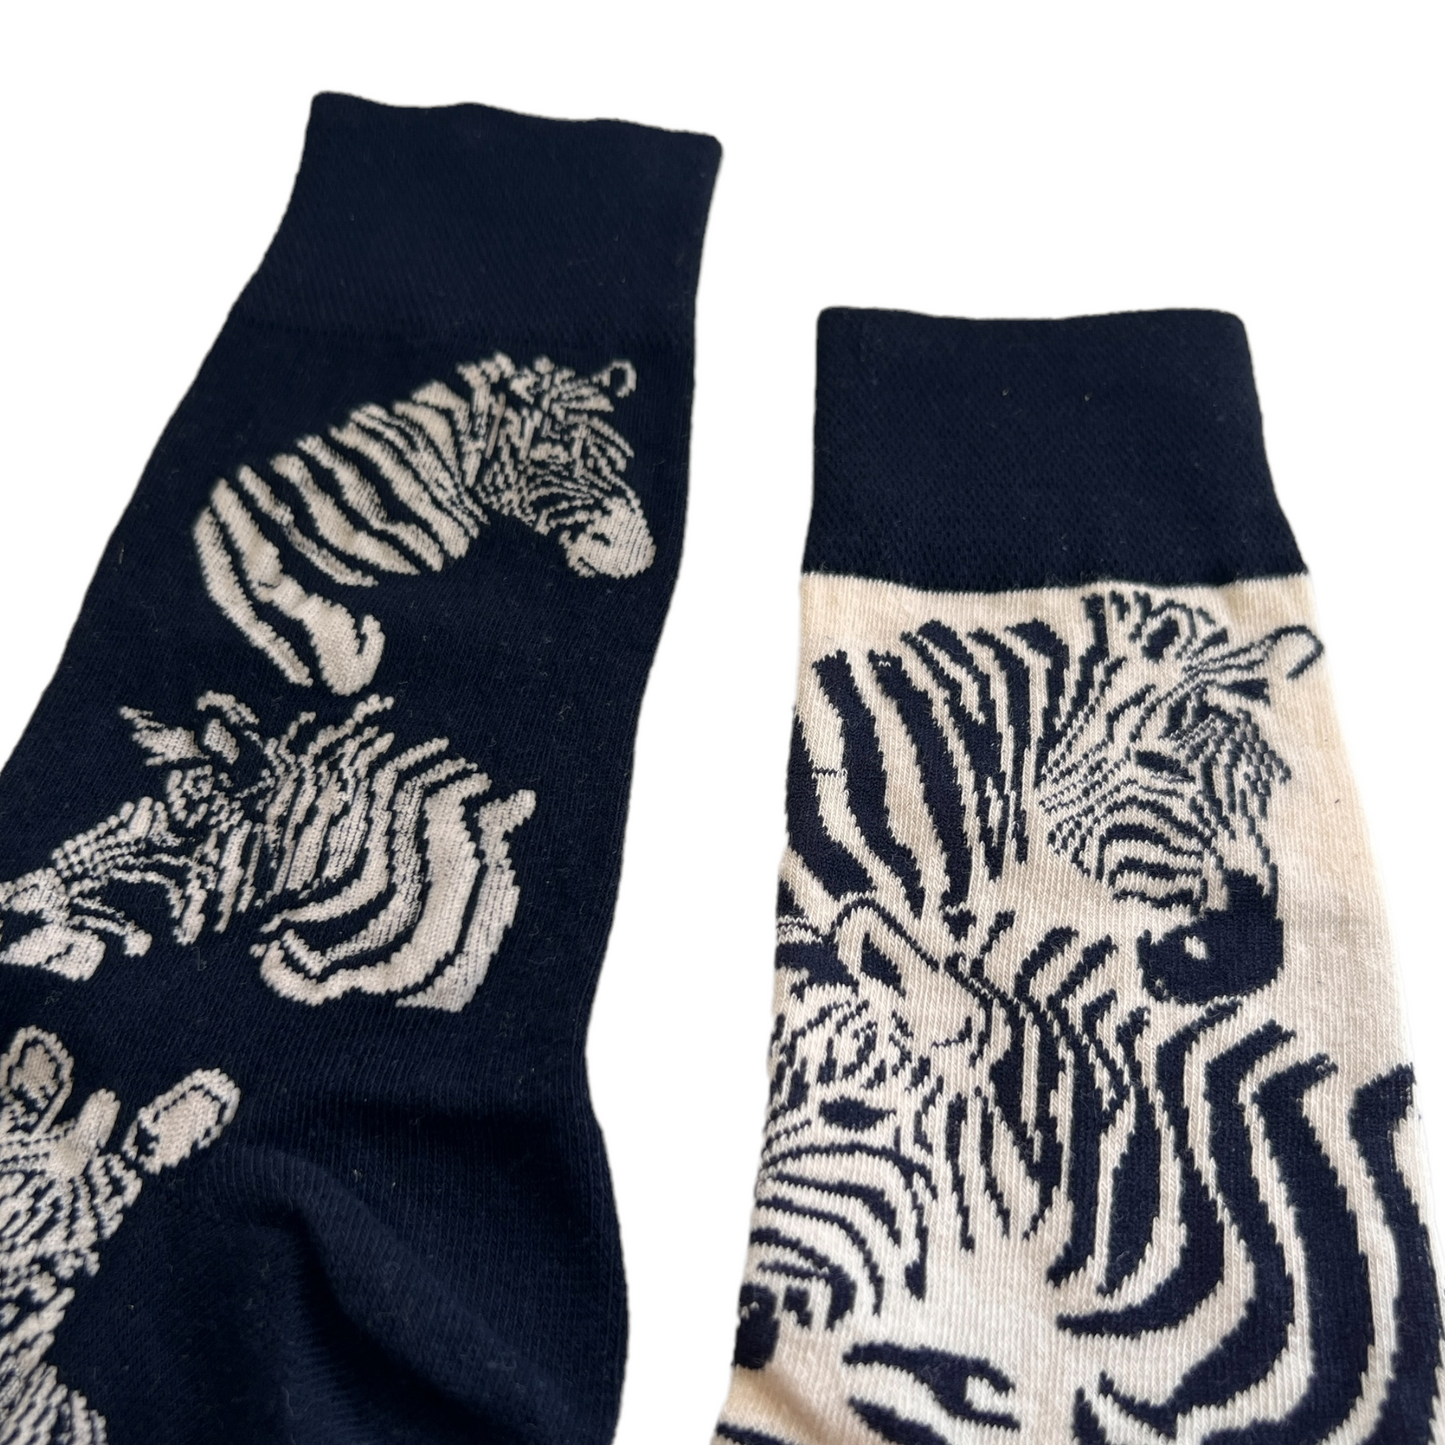 Socks — Zebra  SPIRIT SPARKPLUGS   